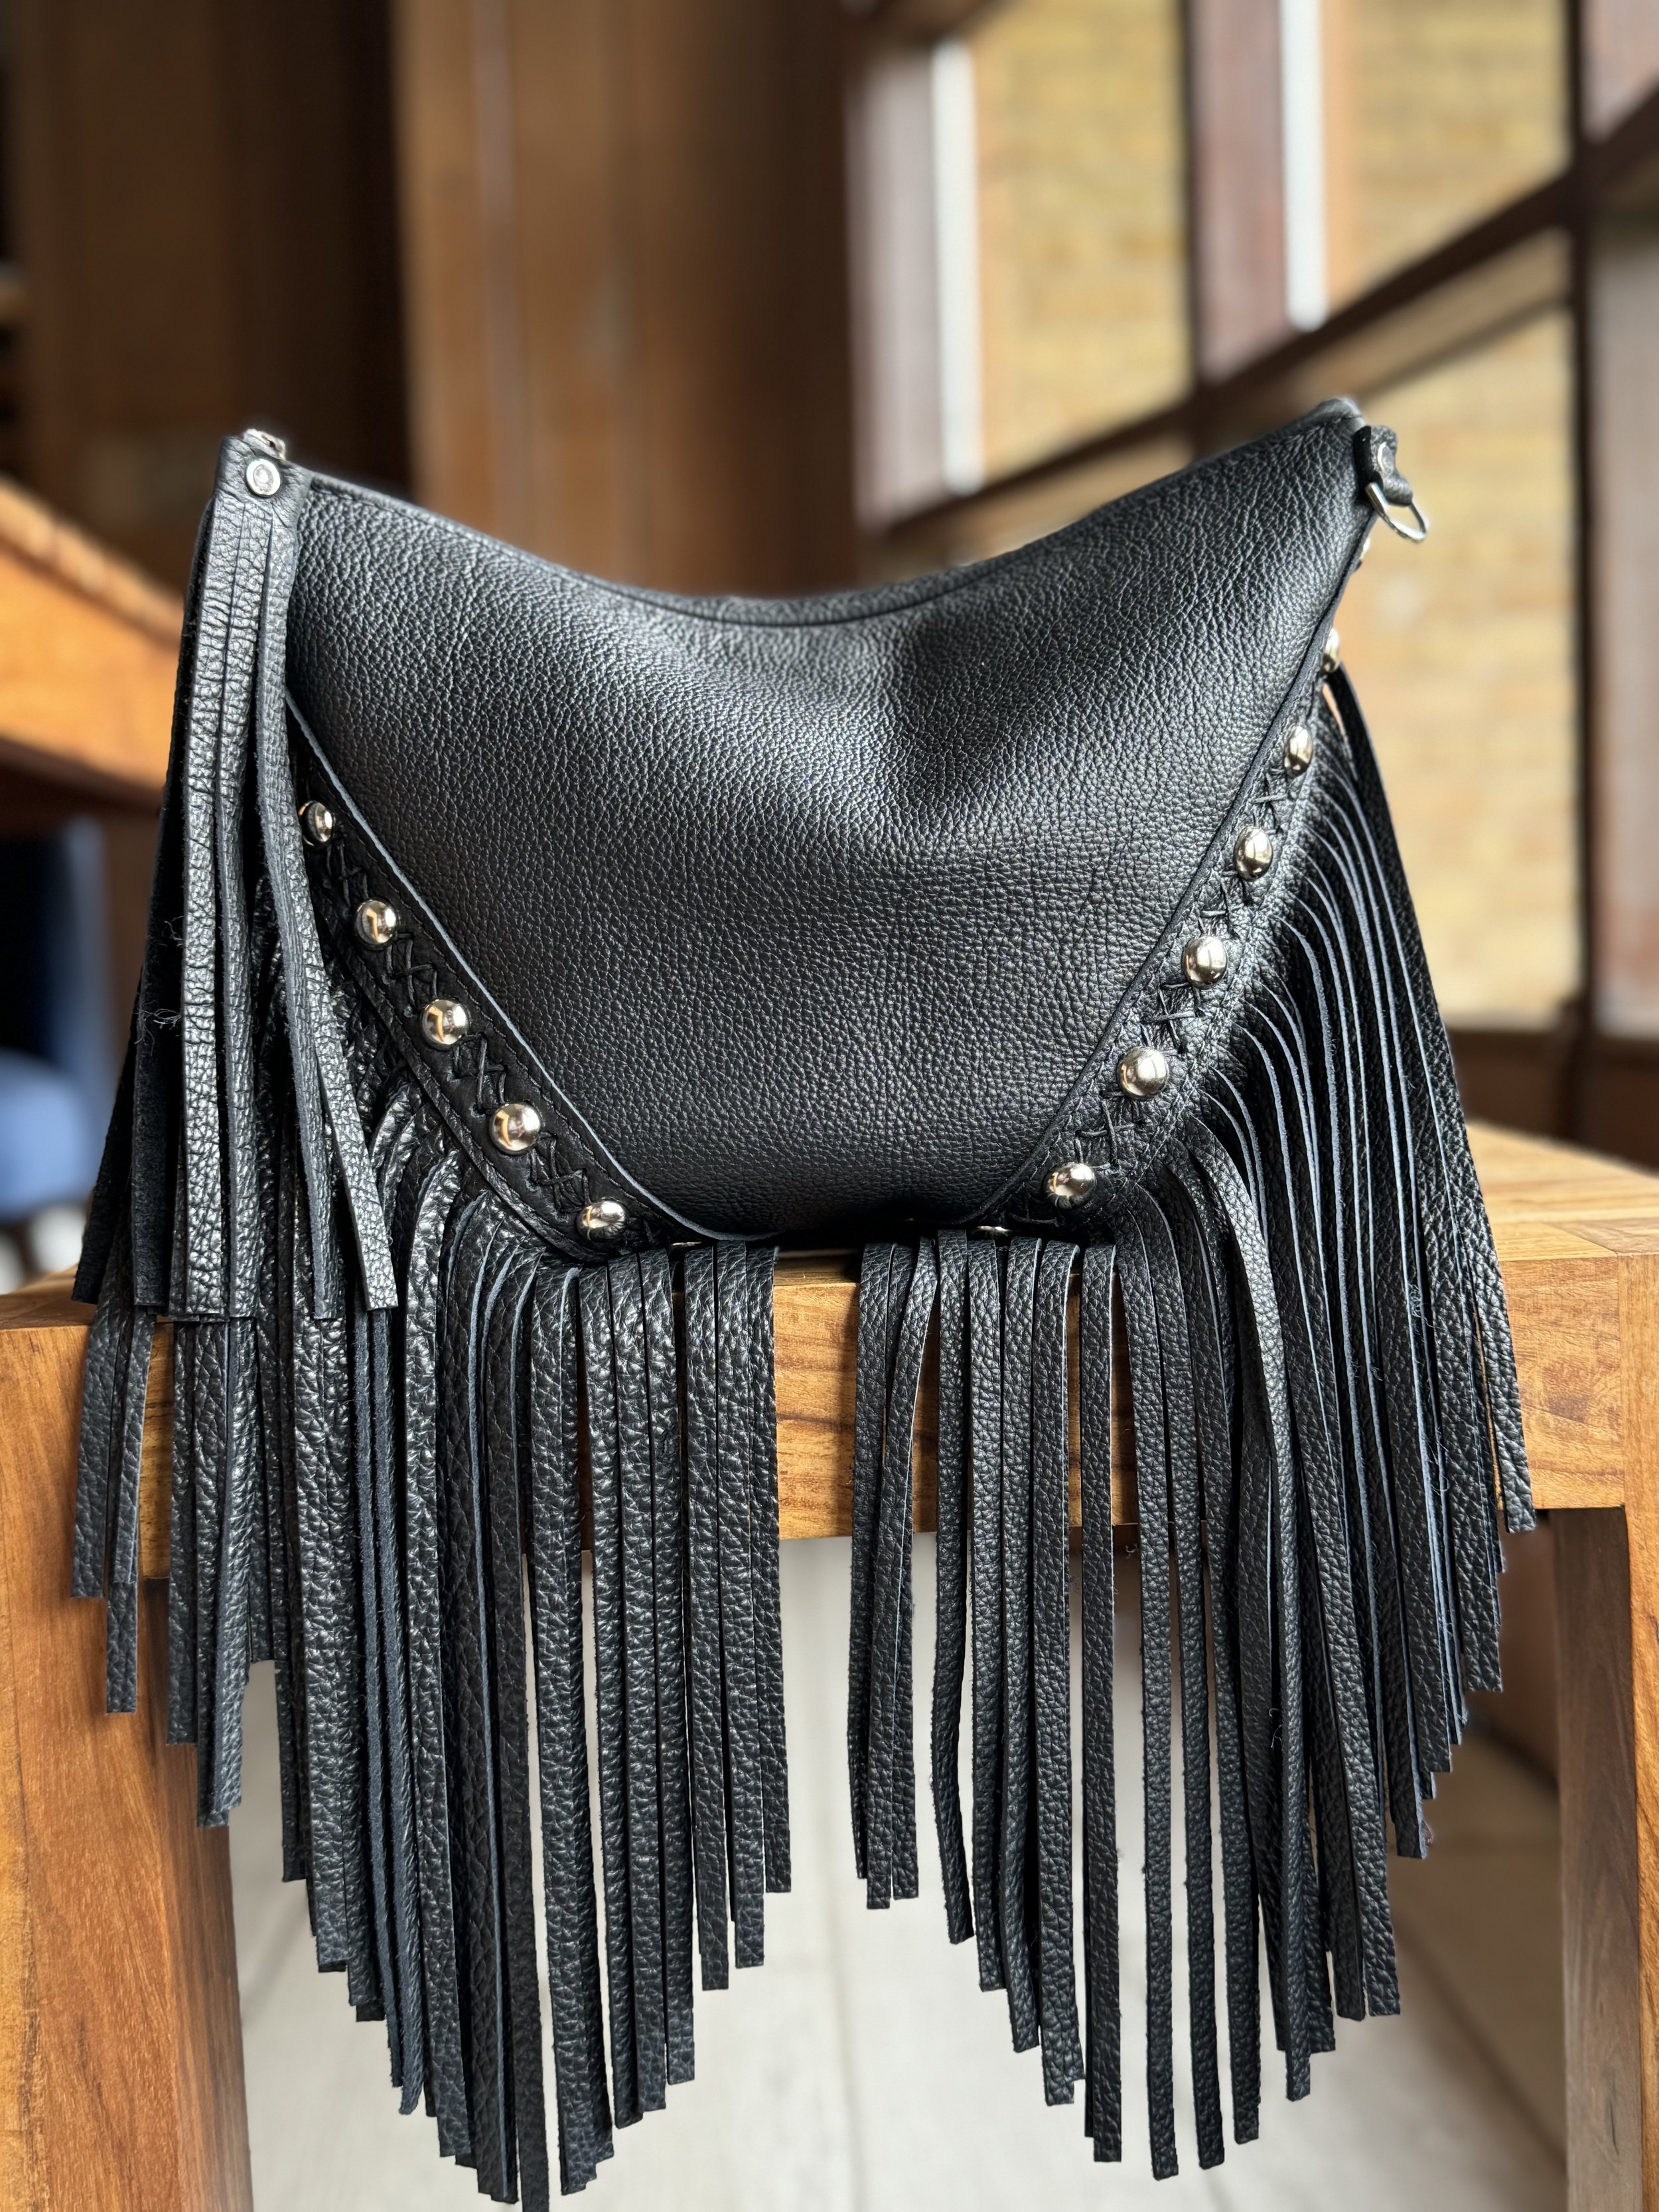 Allison's Design Your Own XL Radley Bag